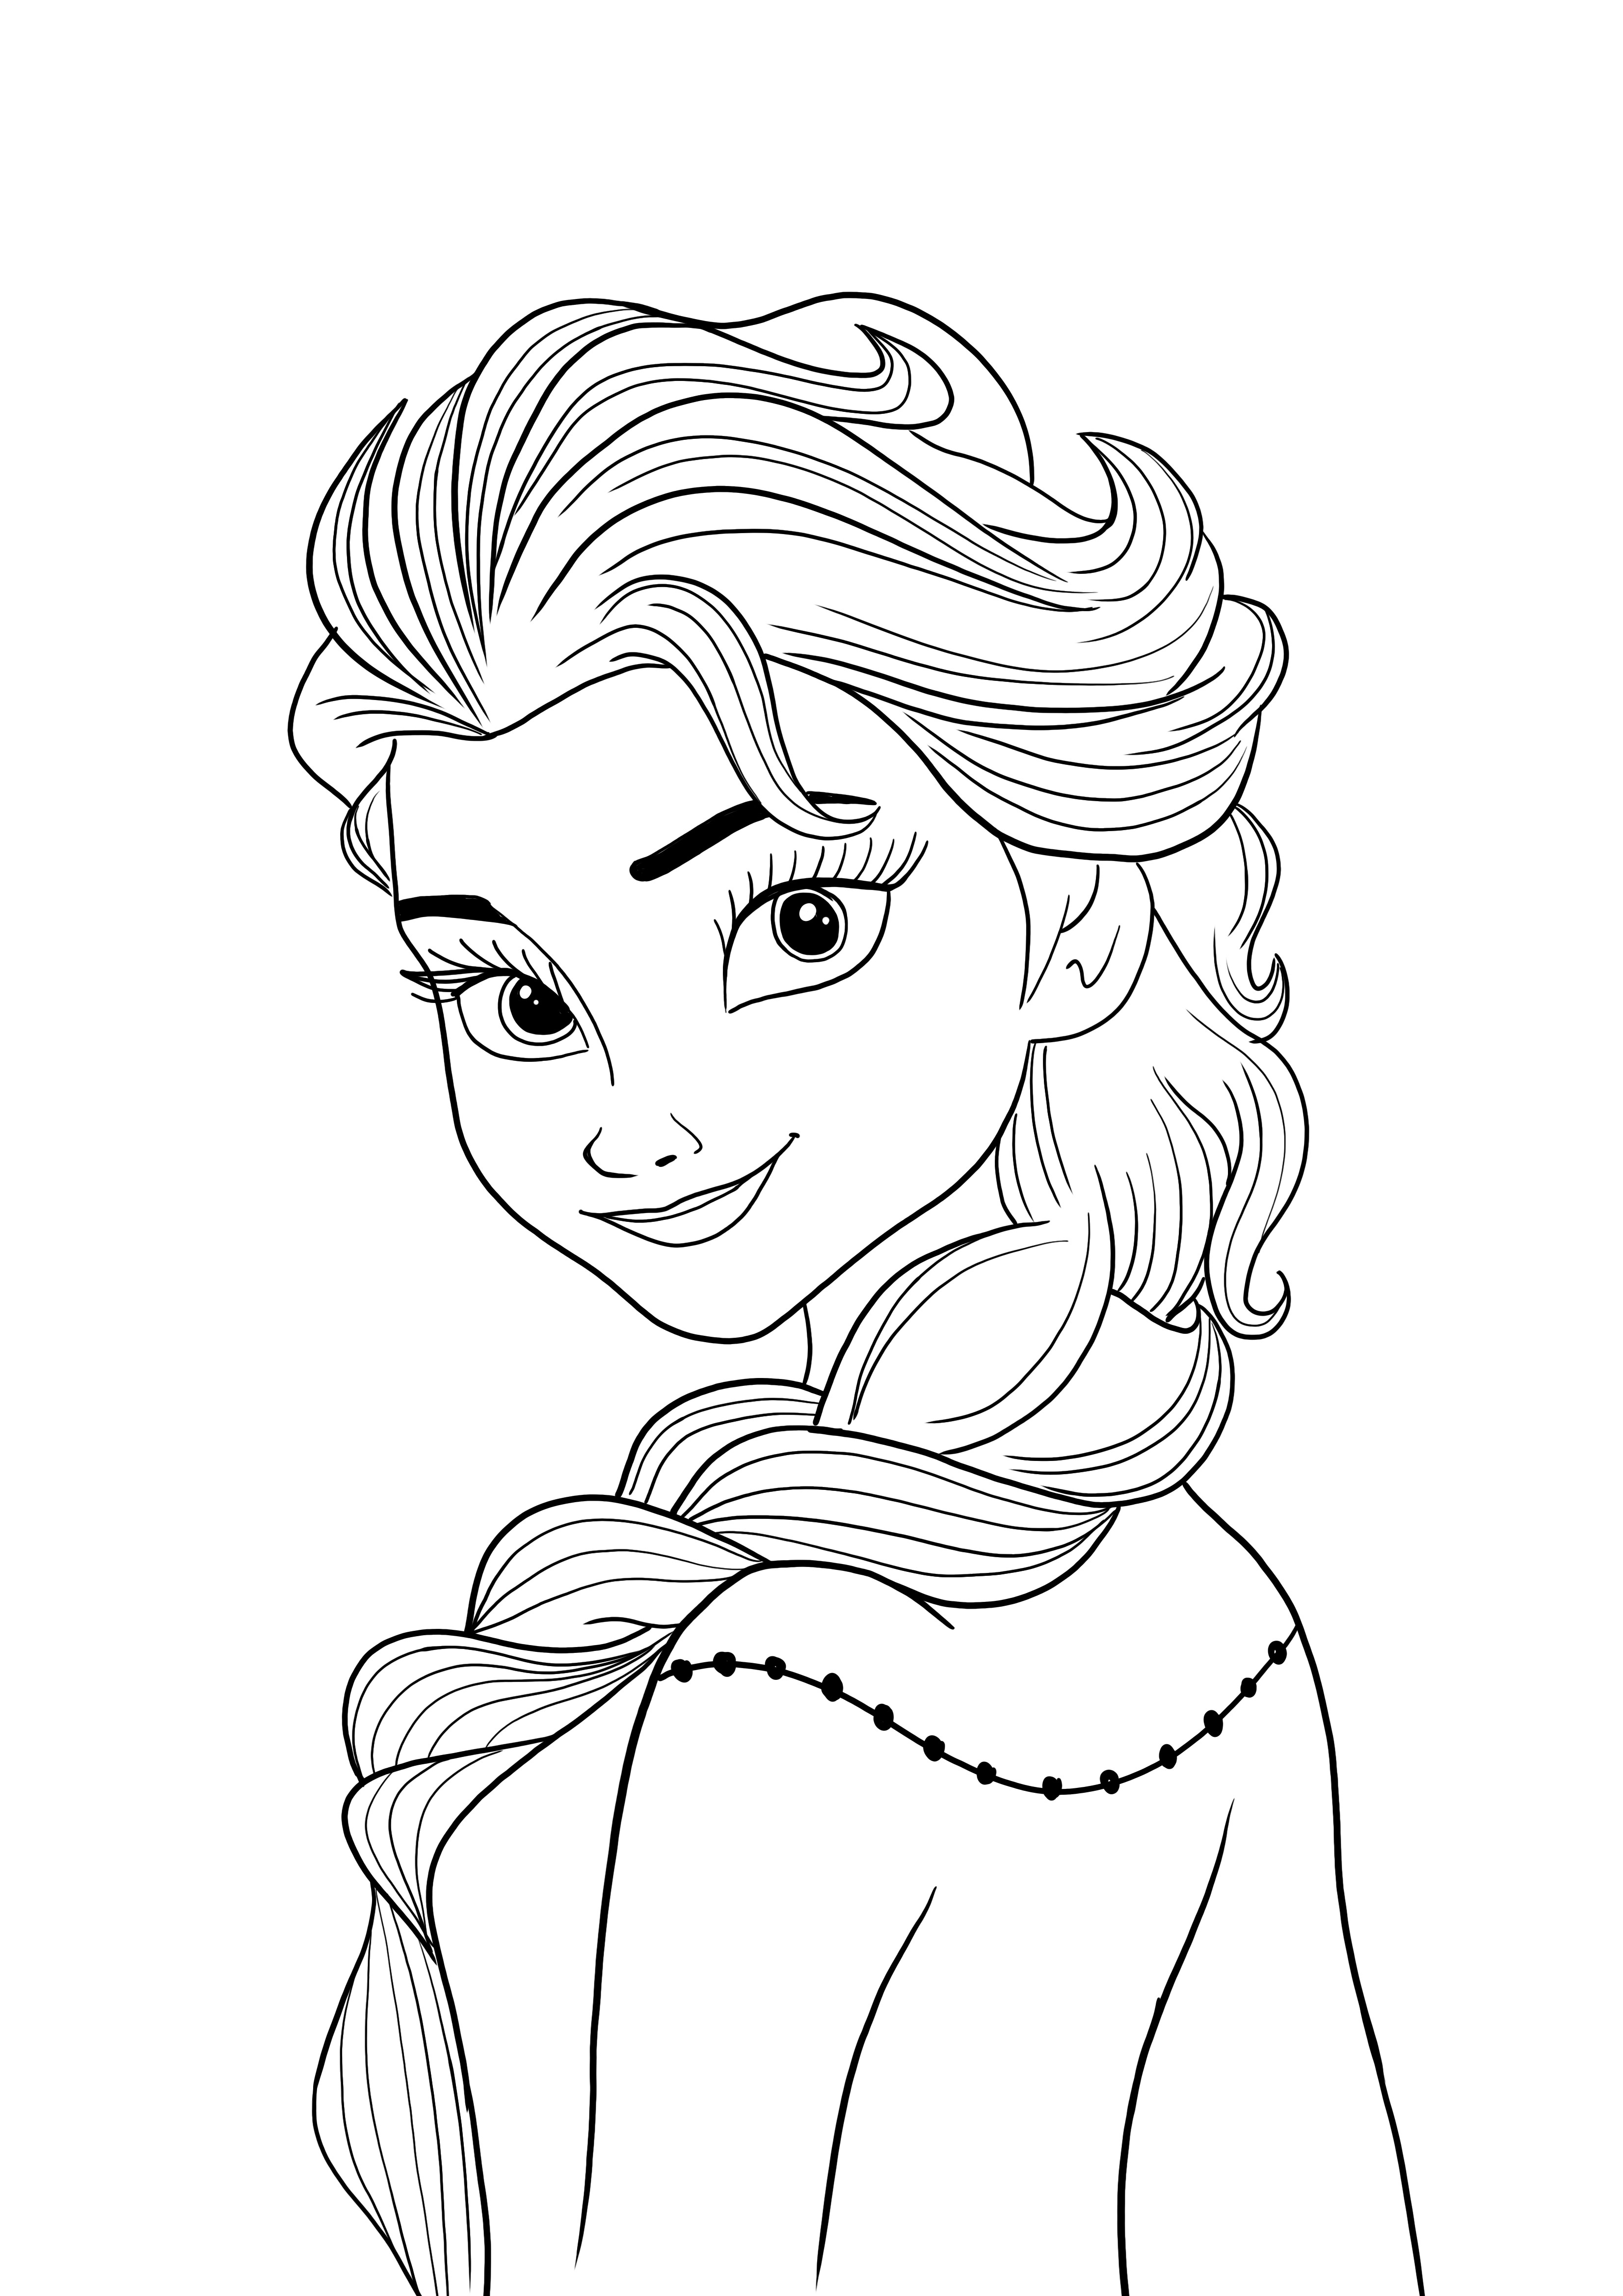 Elsa para colorir e imprimir gratuitamente